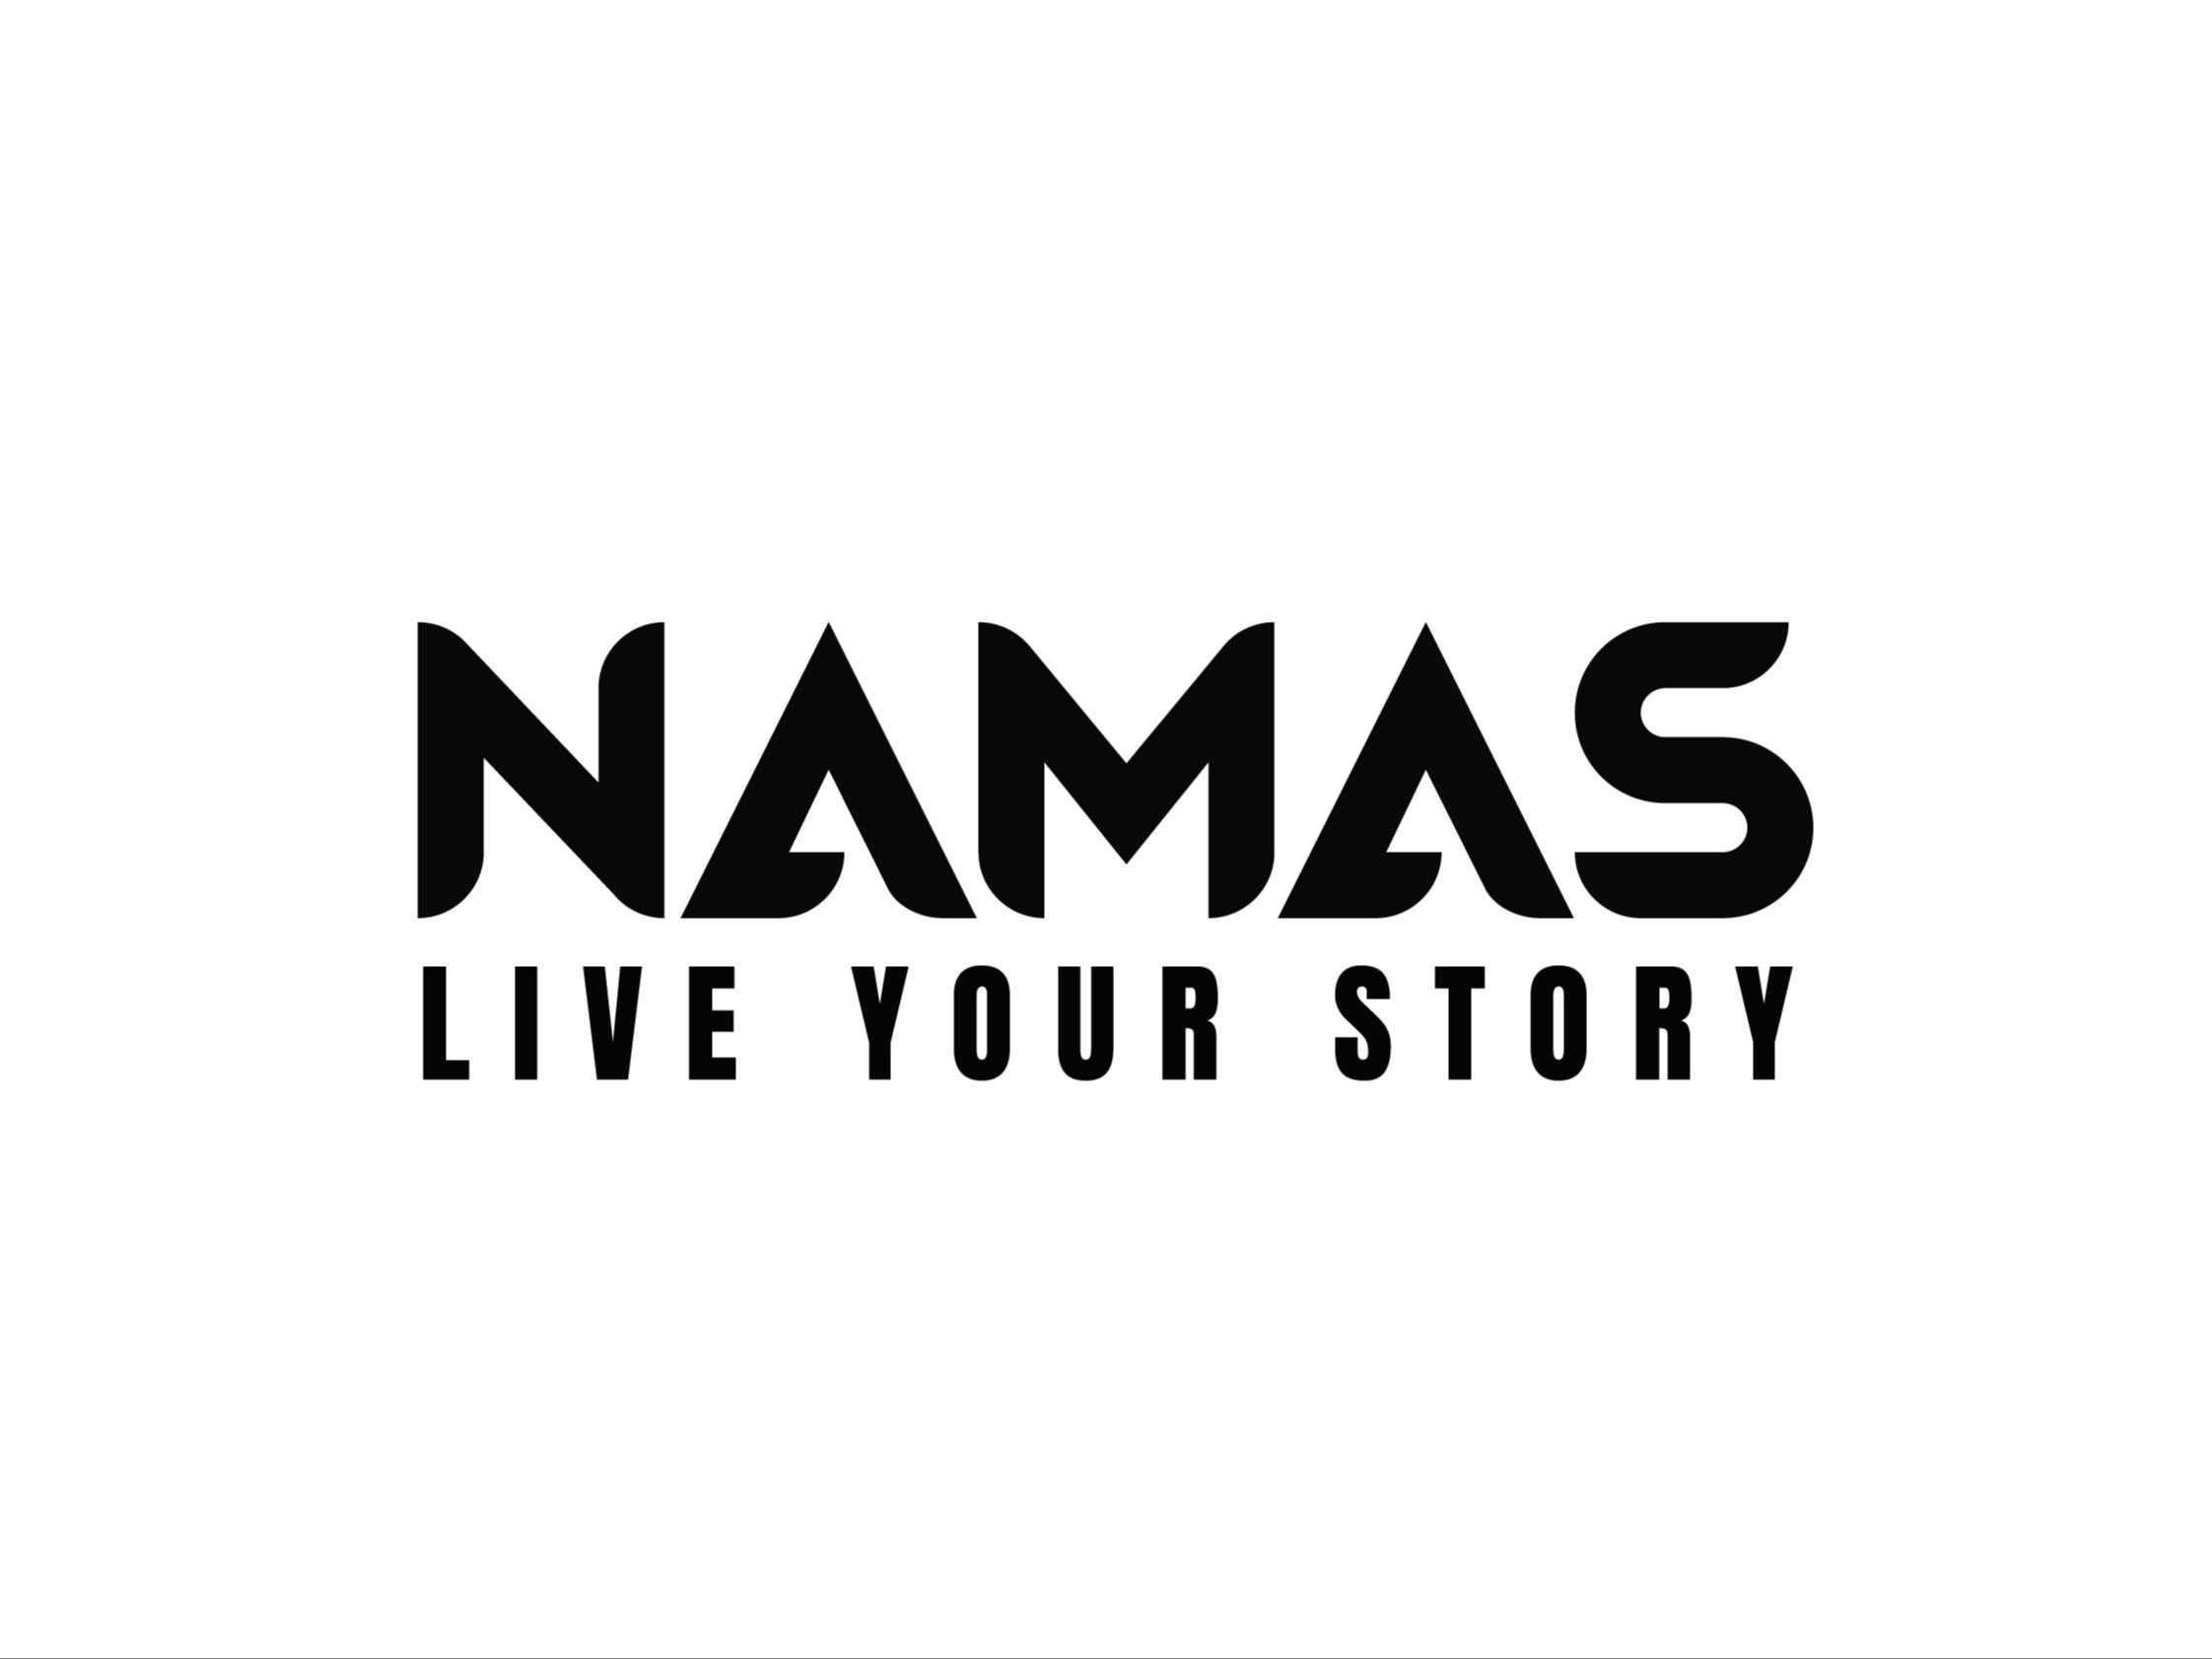 Namas Adventure Ltd